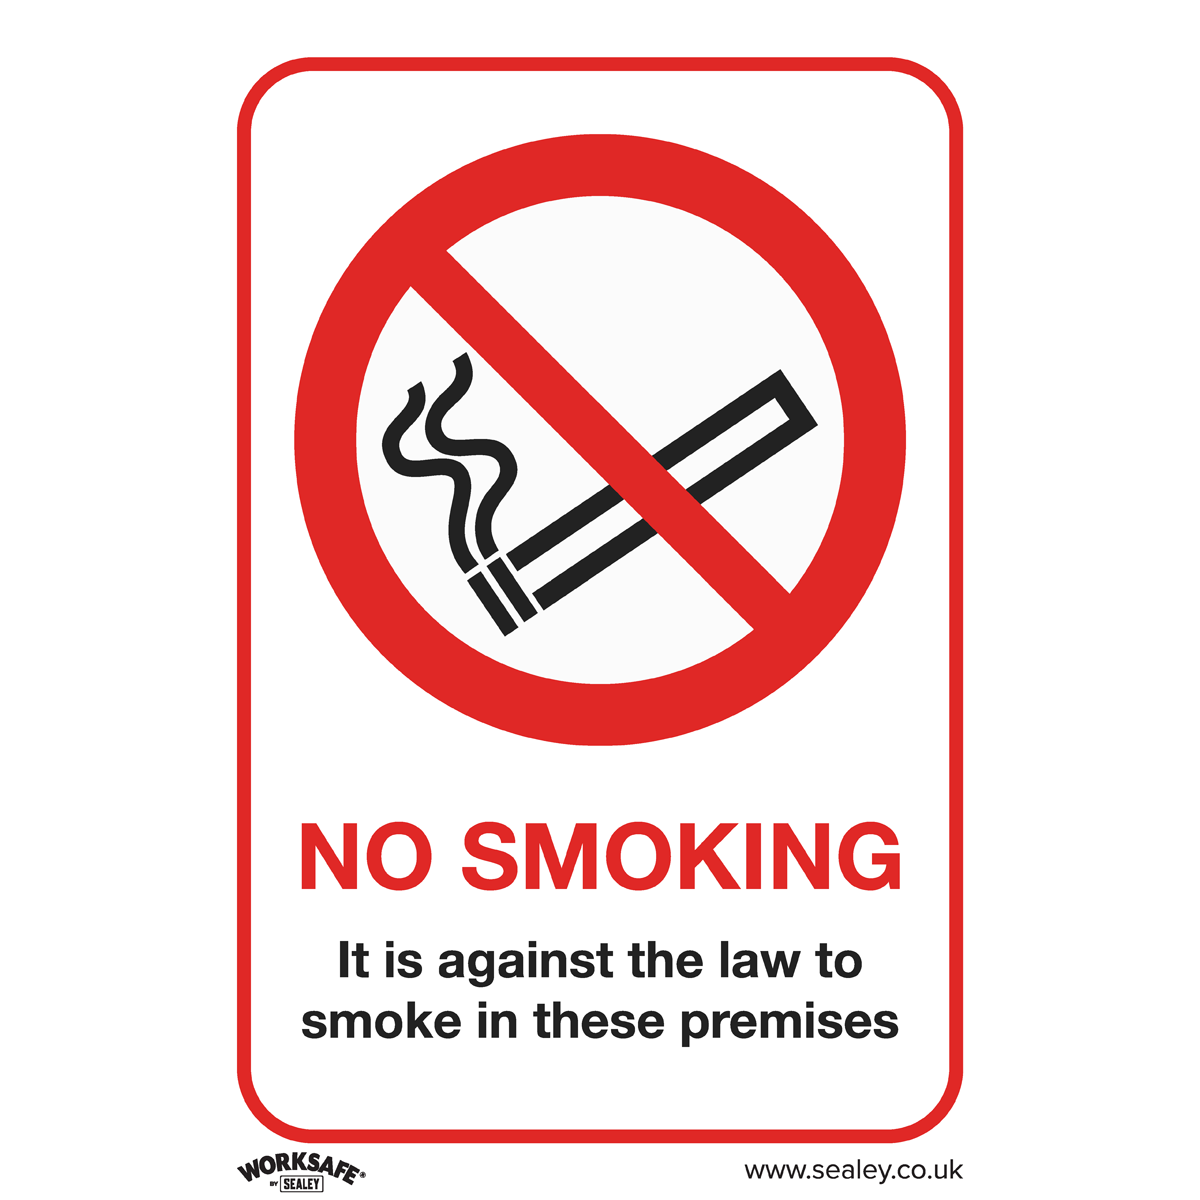 Sealey Prohibition Safety Sign - No Smoking (On Premises) - Rigid Plastic